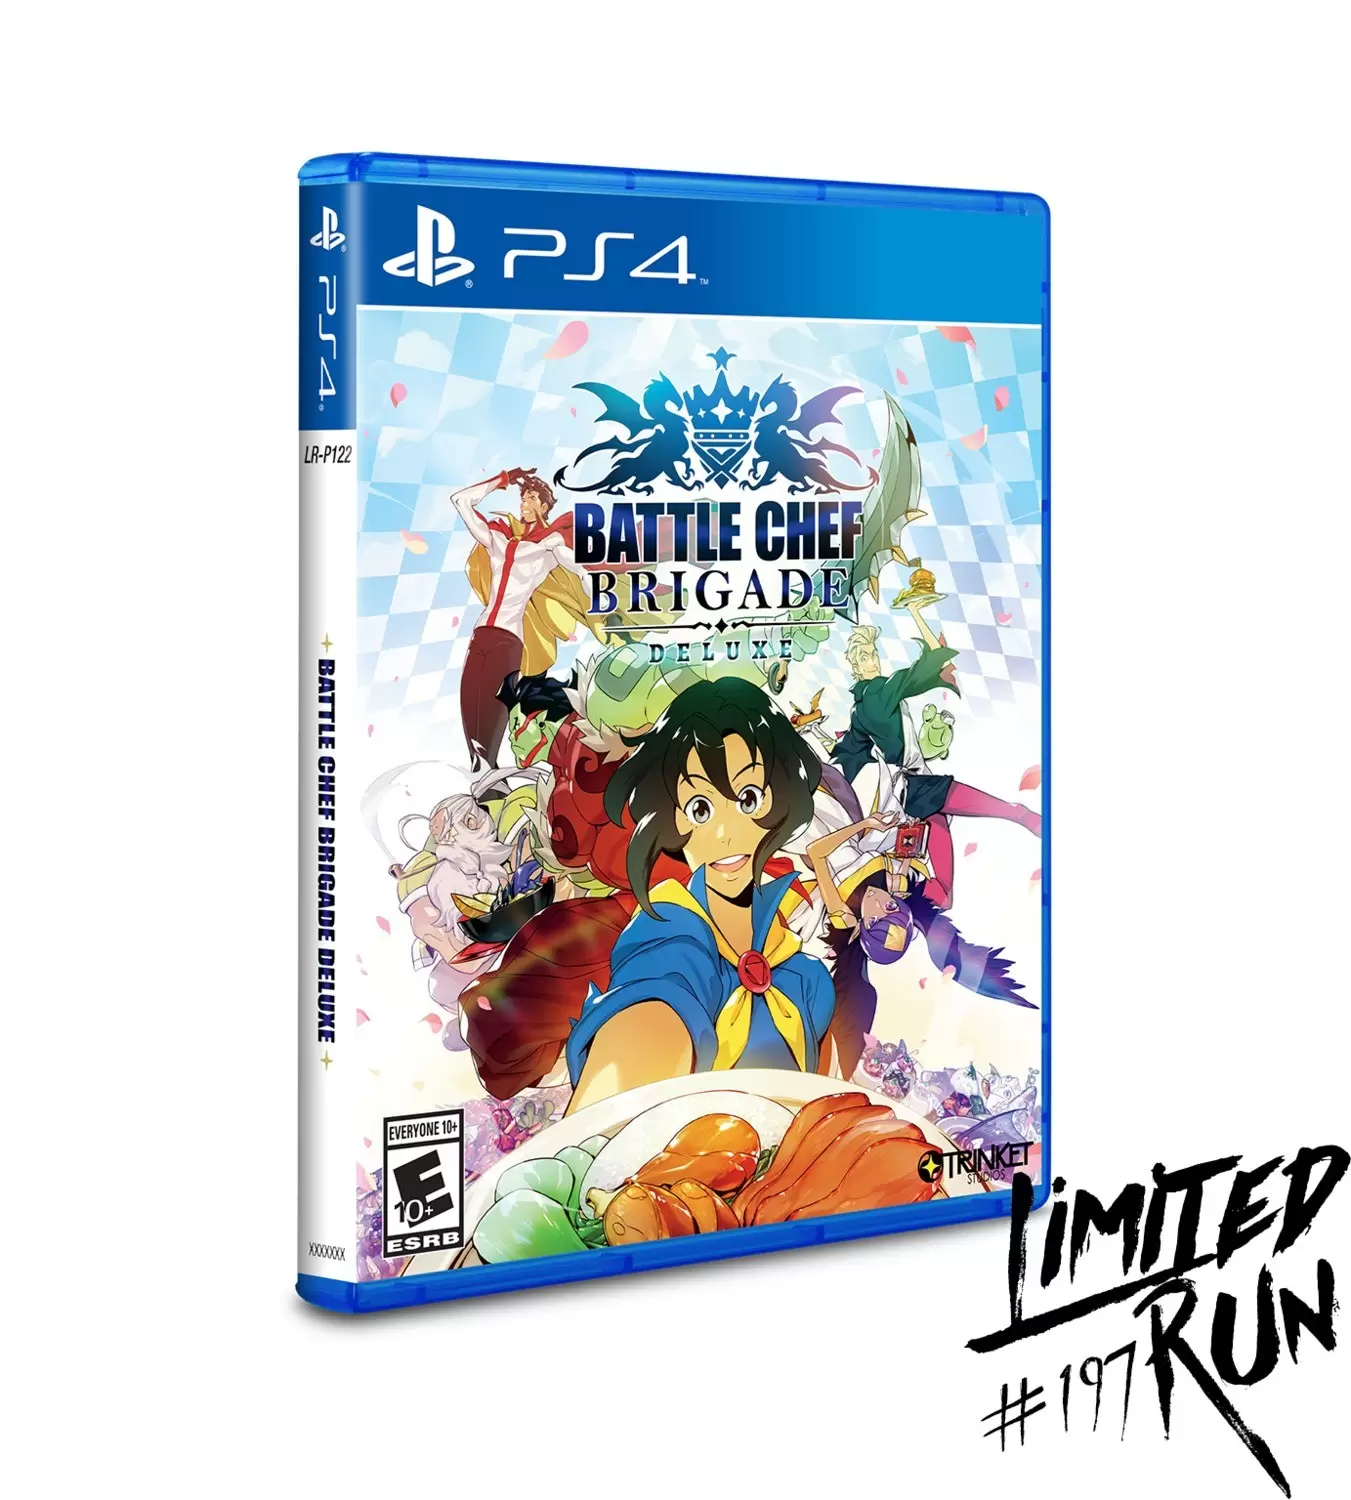 PS4 Games - Battle Chef Brigade